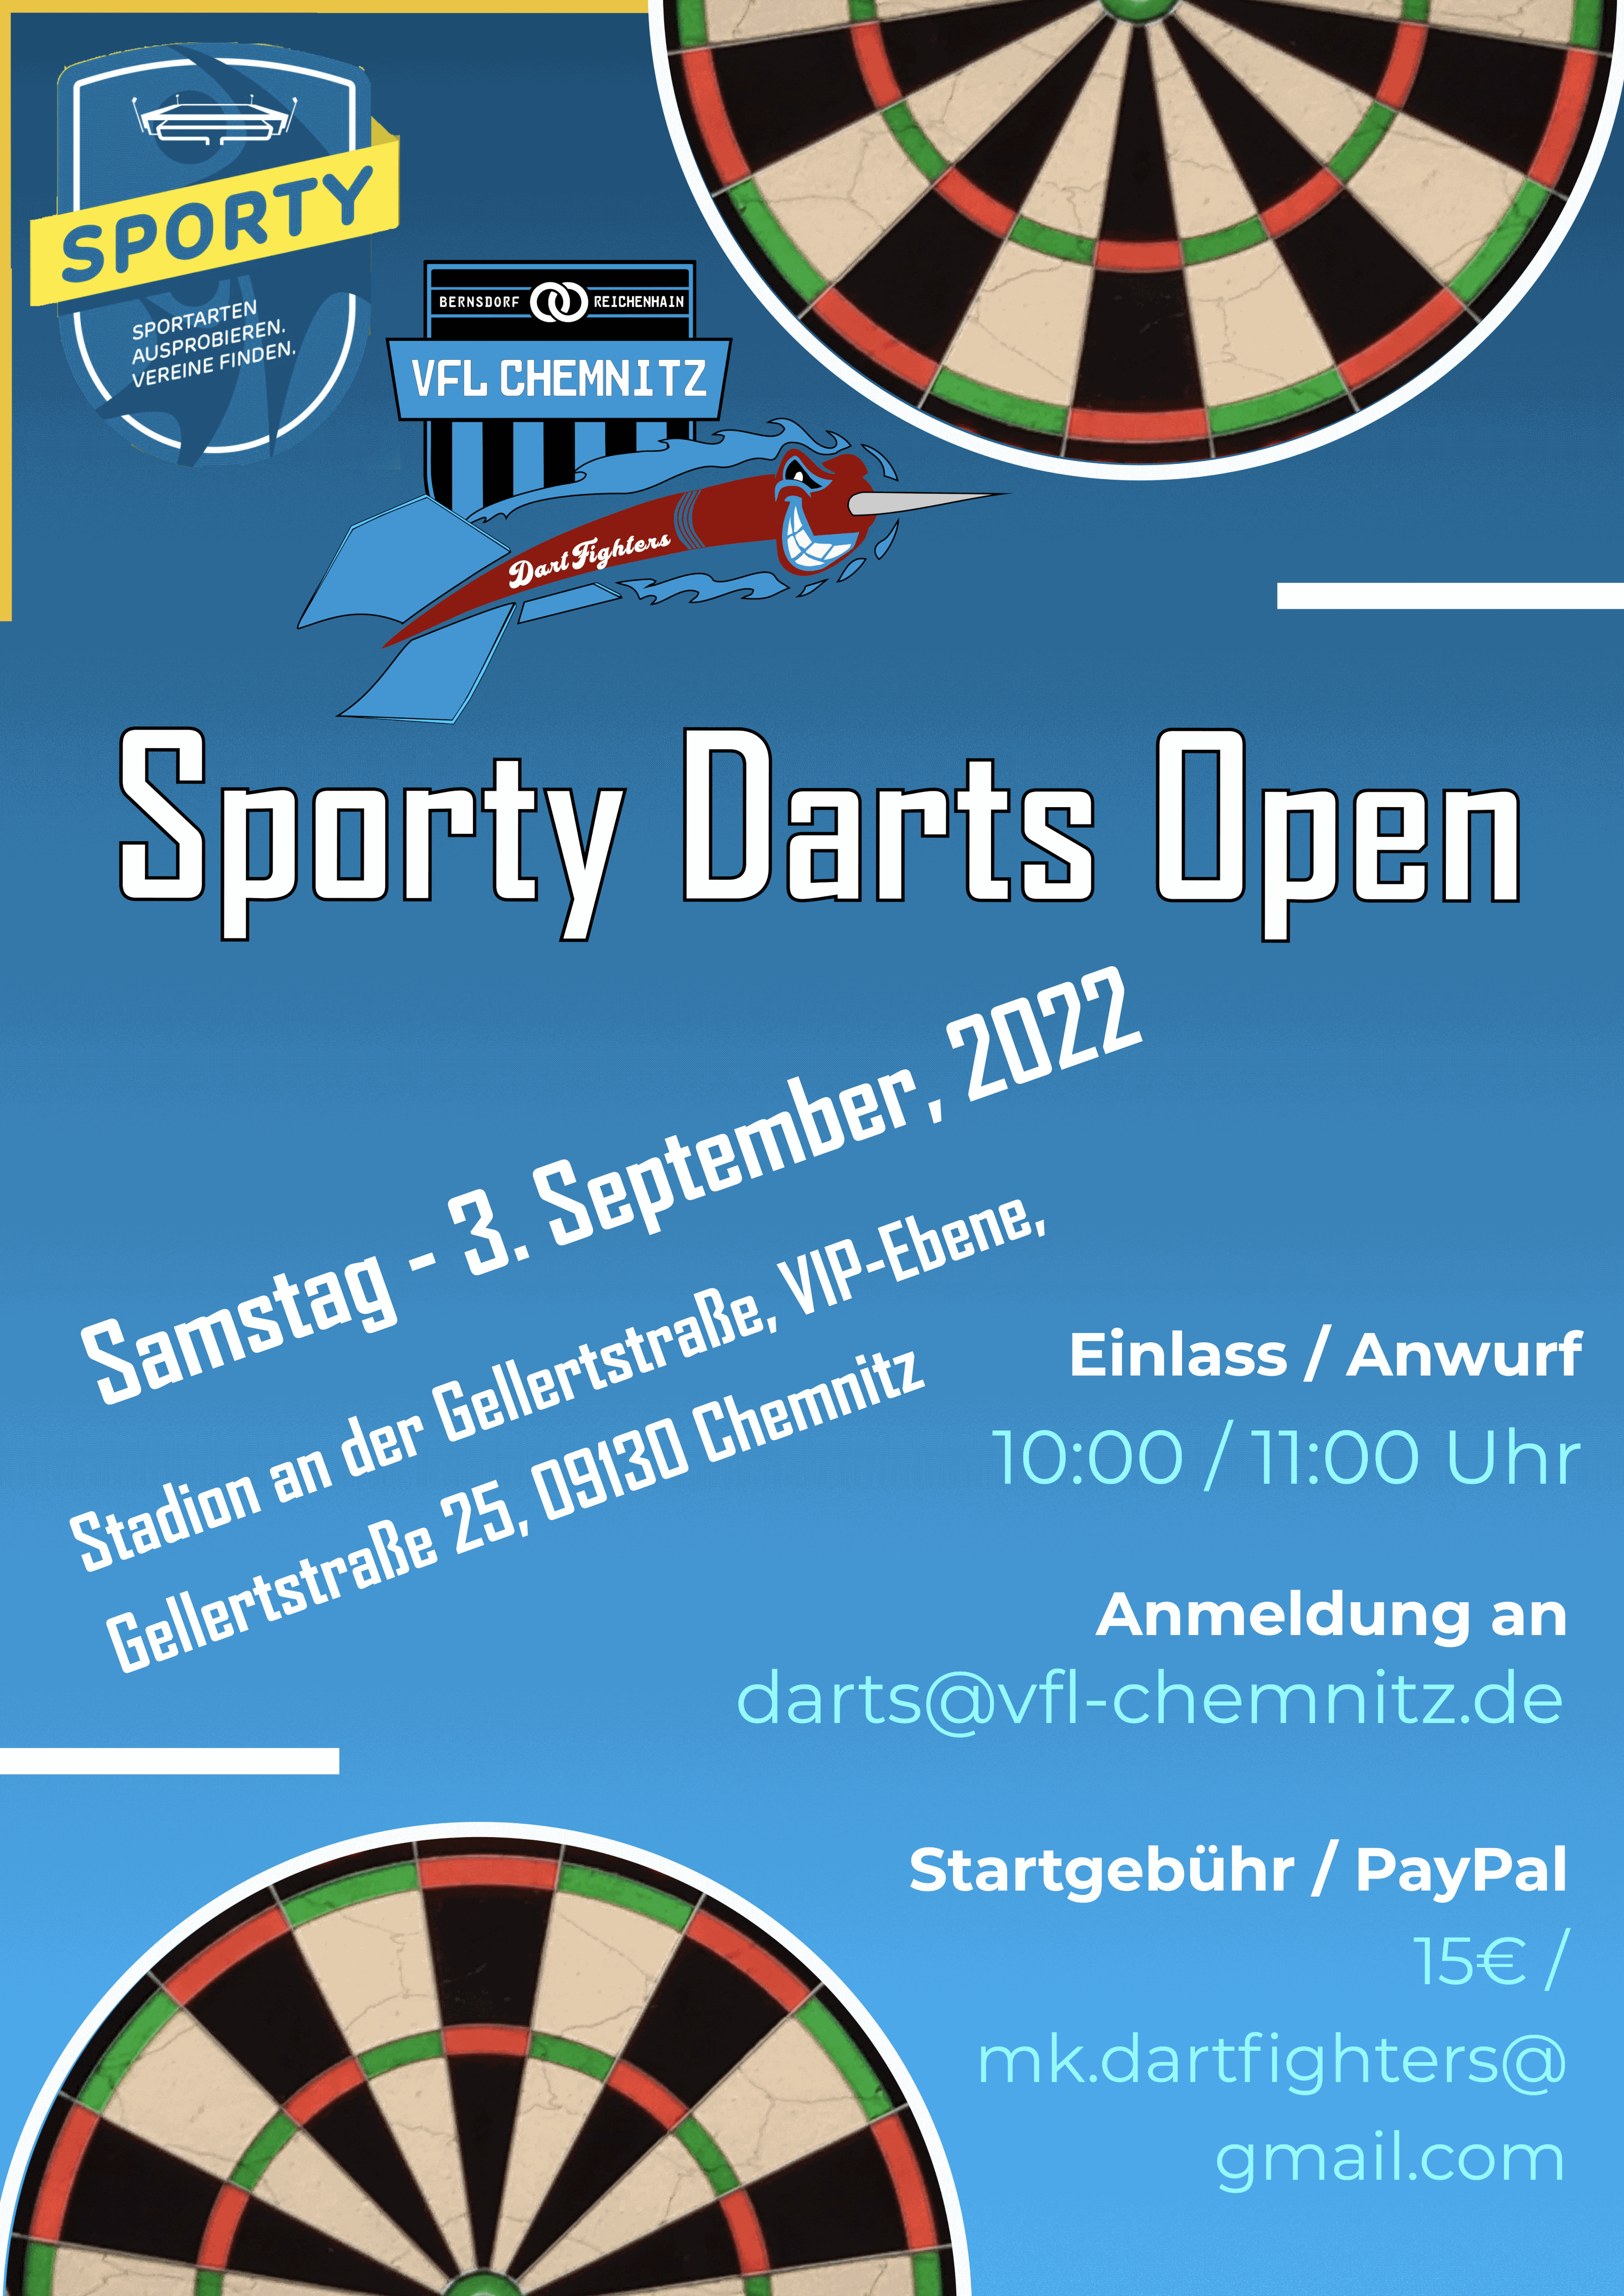 Die Sporty Darts Open VfL Chemnitz